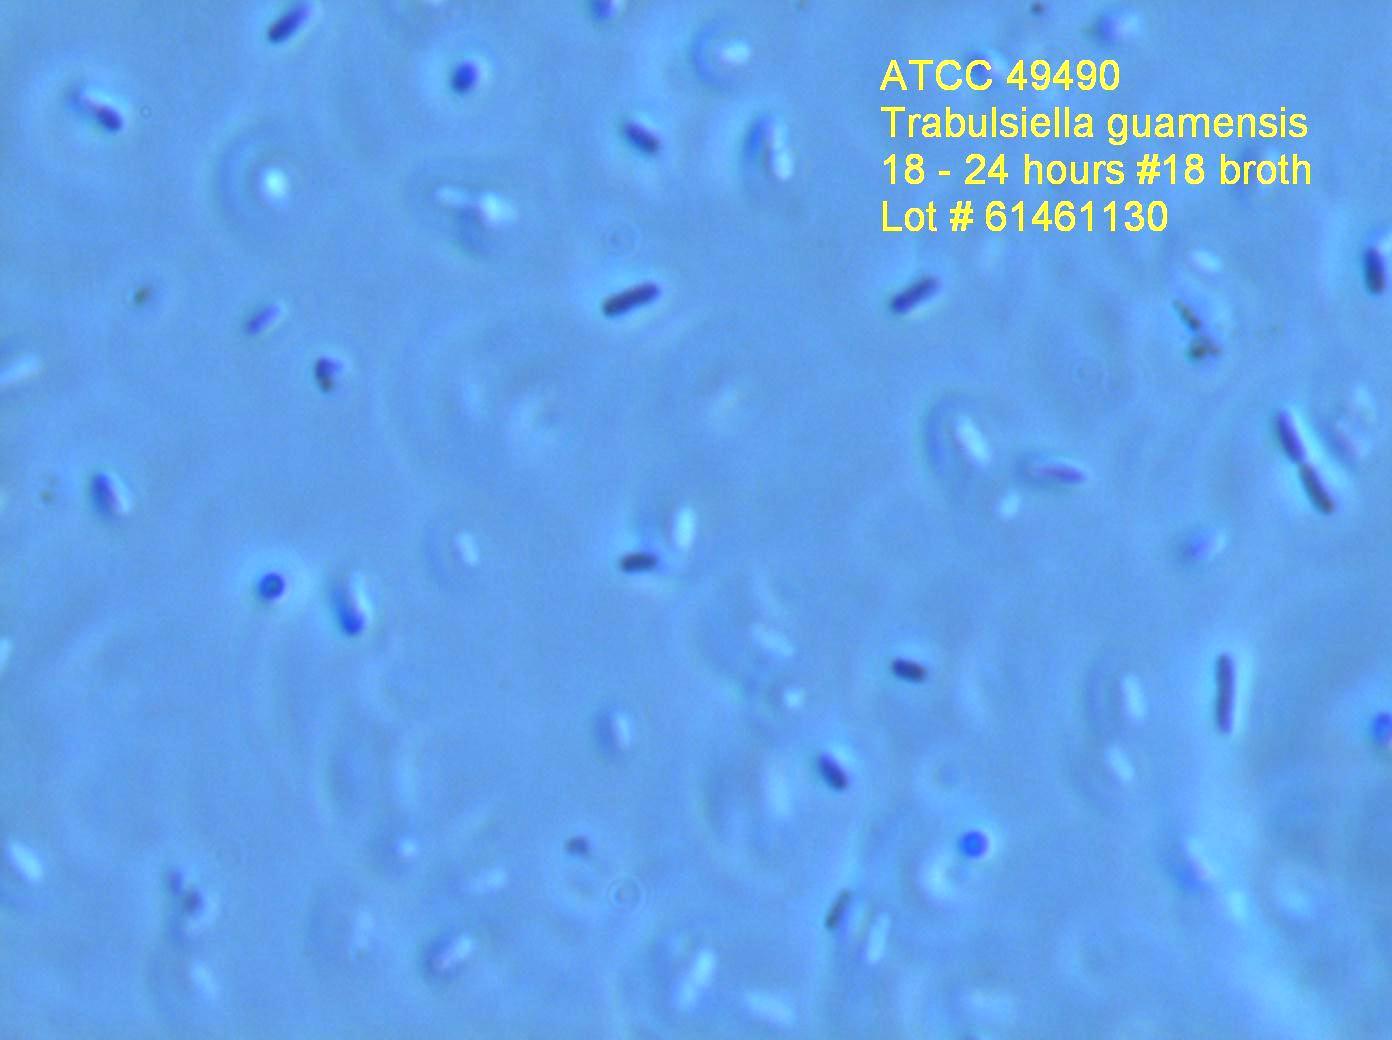 ATCC 49490 cell micrograph (18-24 hrs)